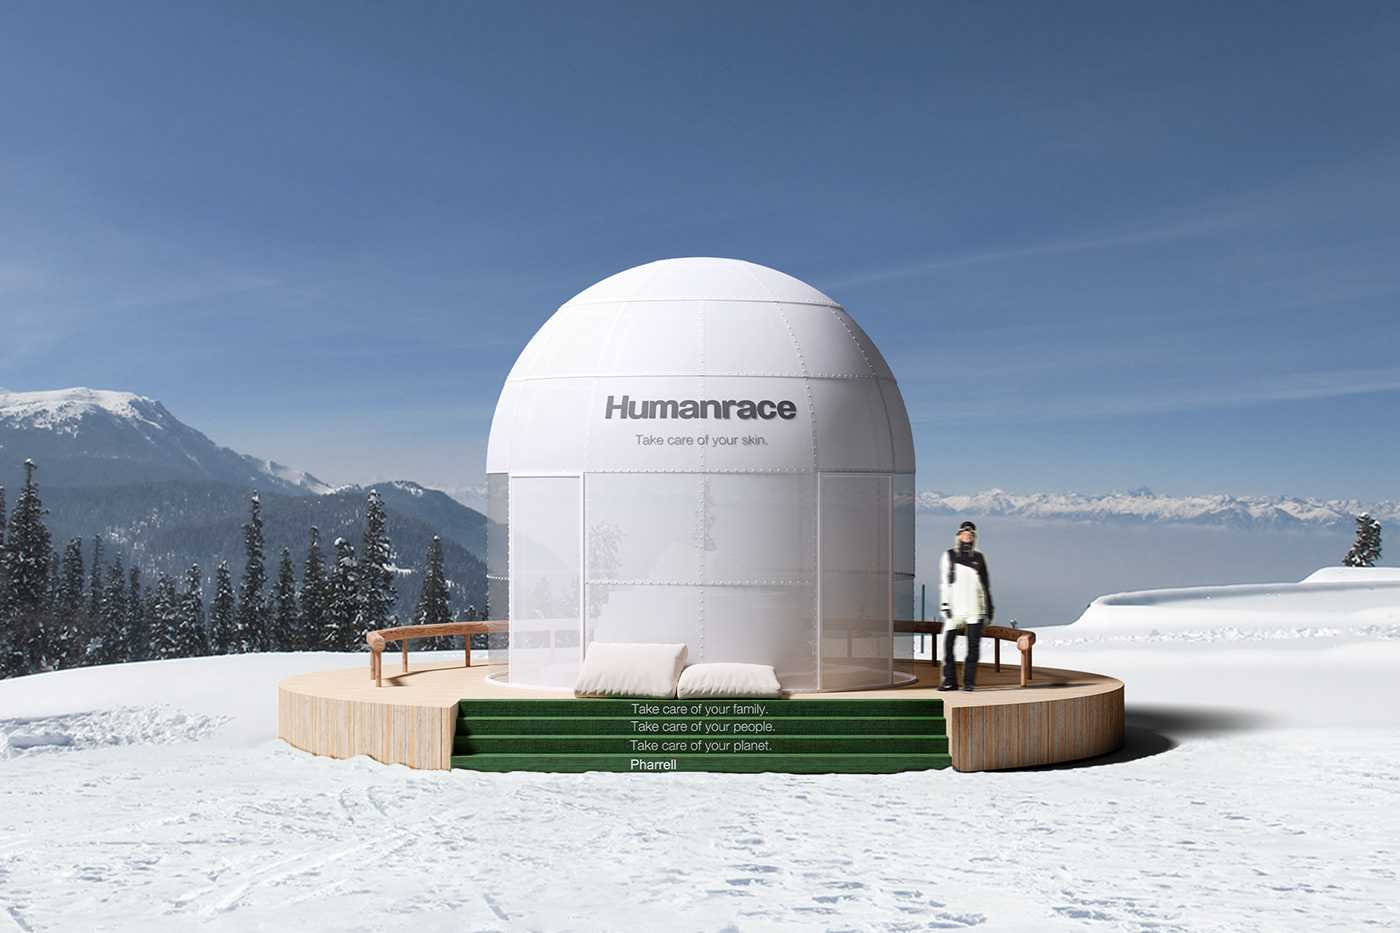 design humanrace mountains Outdoor pharrell williams Retail skincare dome Nature snow